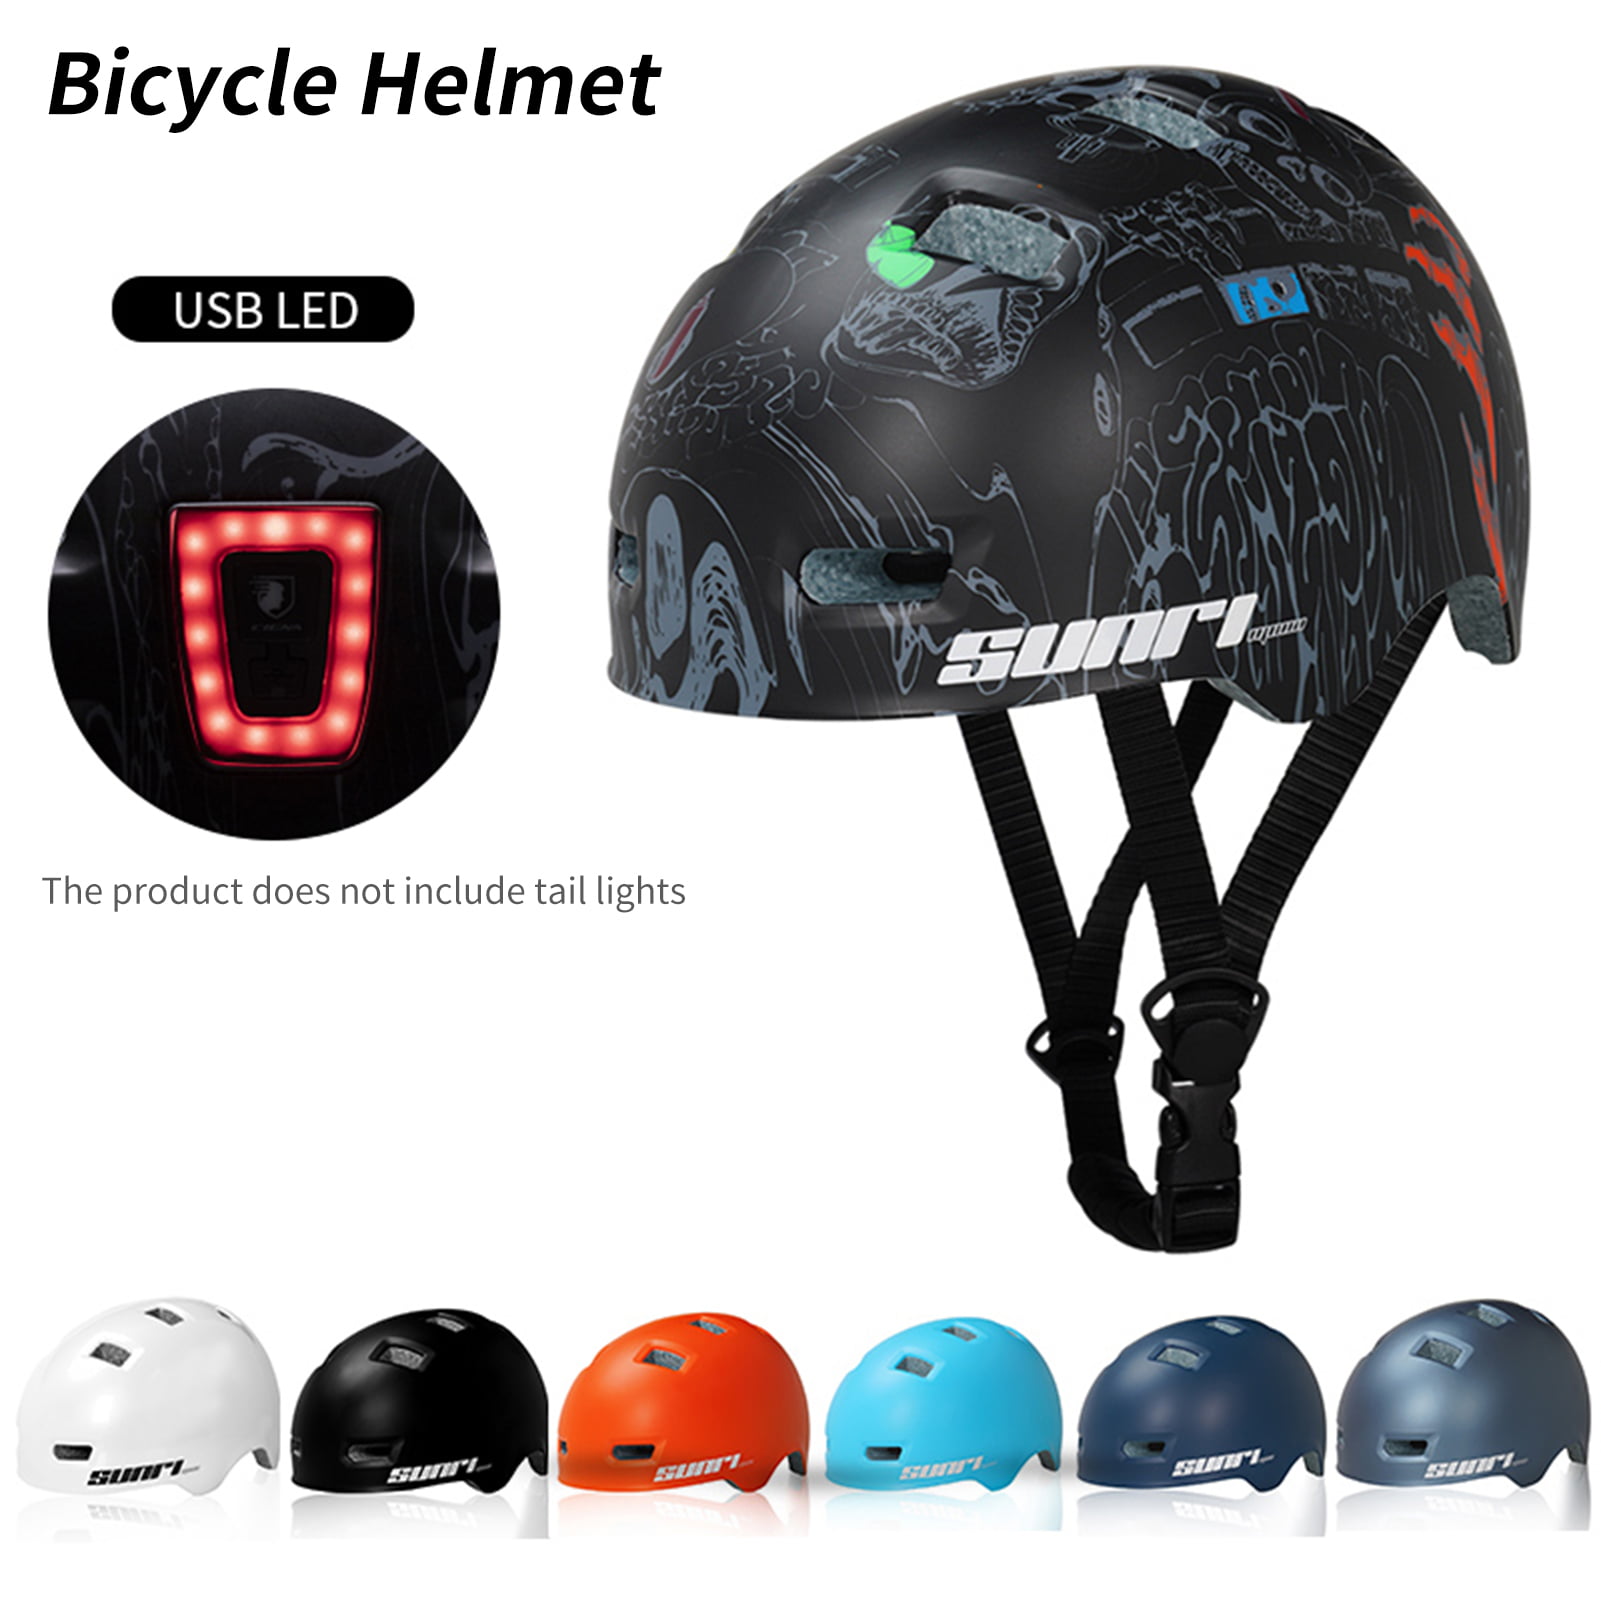 xinRui TS-91 Cycling Helmet Ultralight Head Adjustable Portable Children Safety Helmet for - Walmart.com